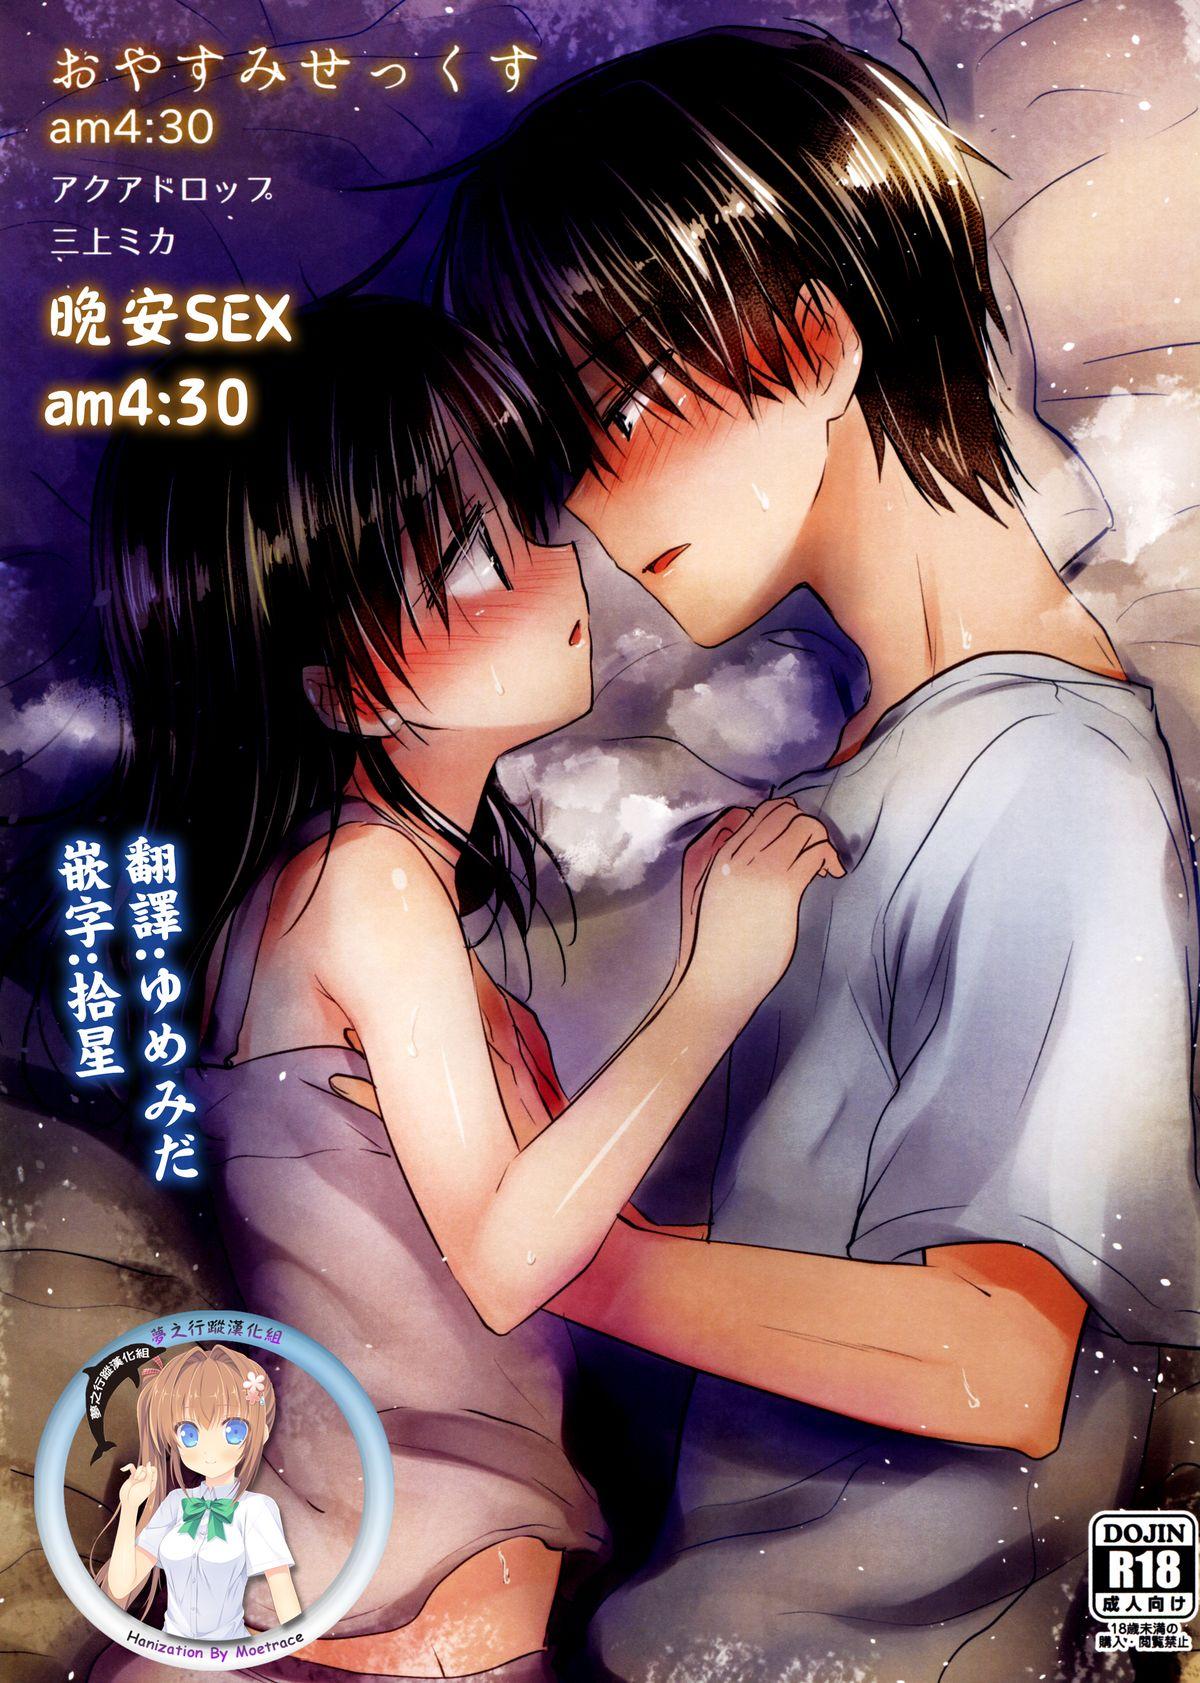 Gang Oyasumi Sex am4:30 | 晚安SEX am4:30 Uncensored - Picture 1